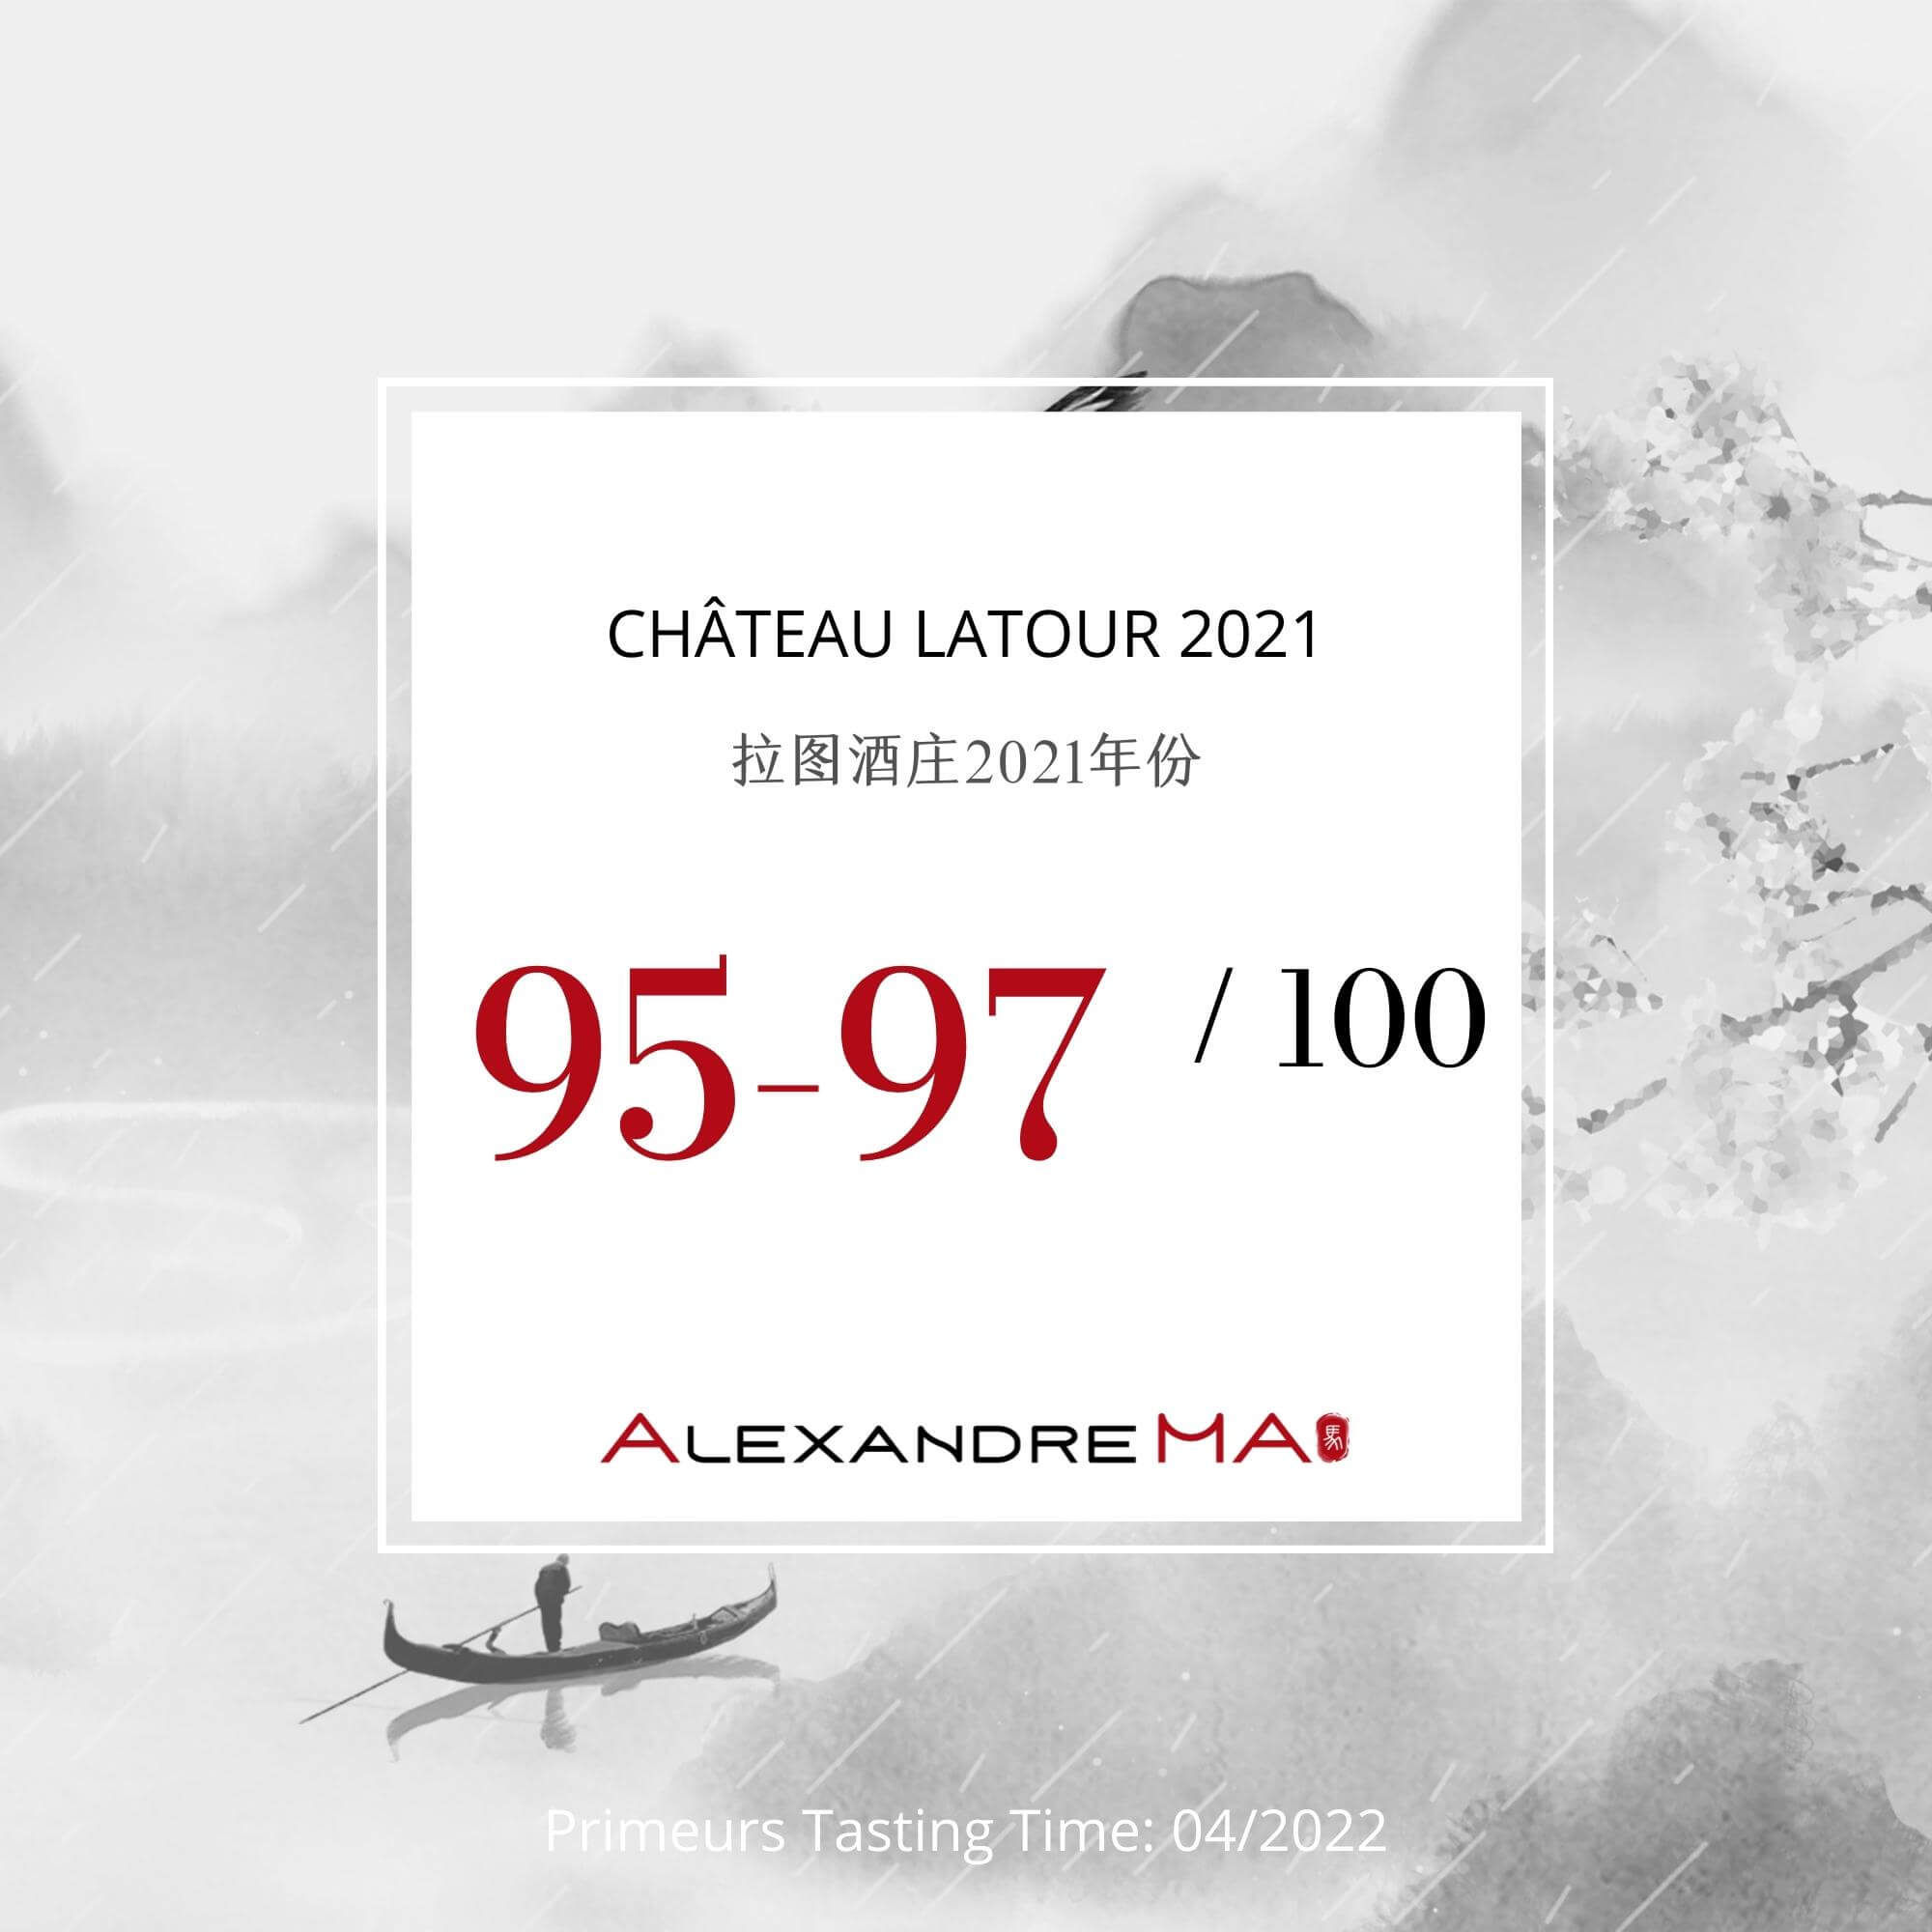 Château Latour 2021 - Alexandre MA